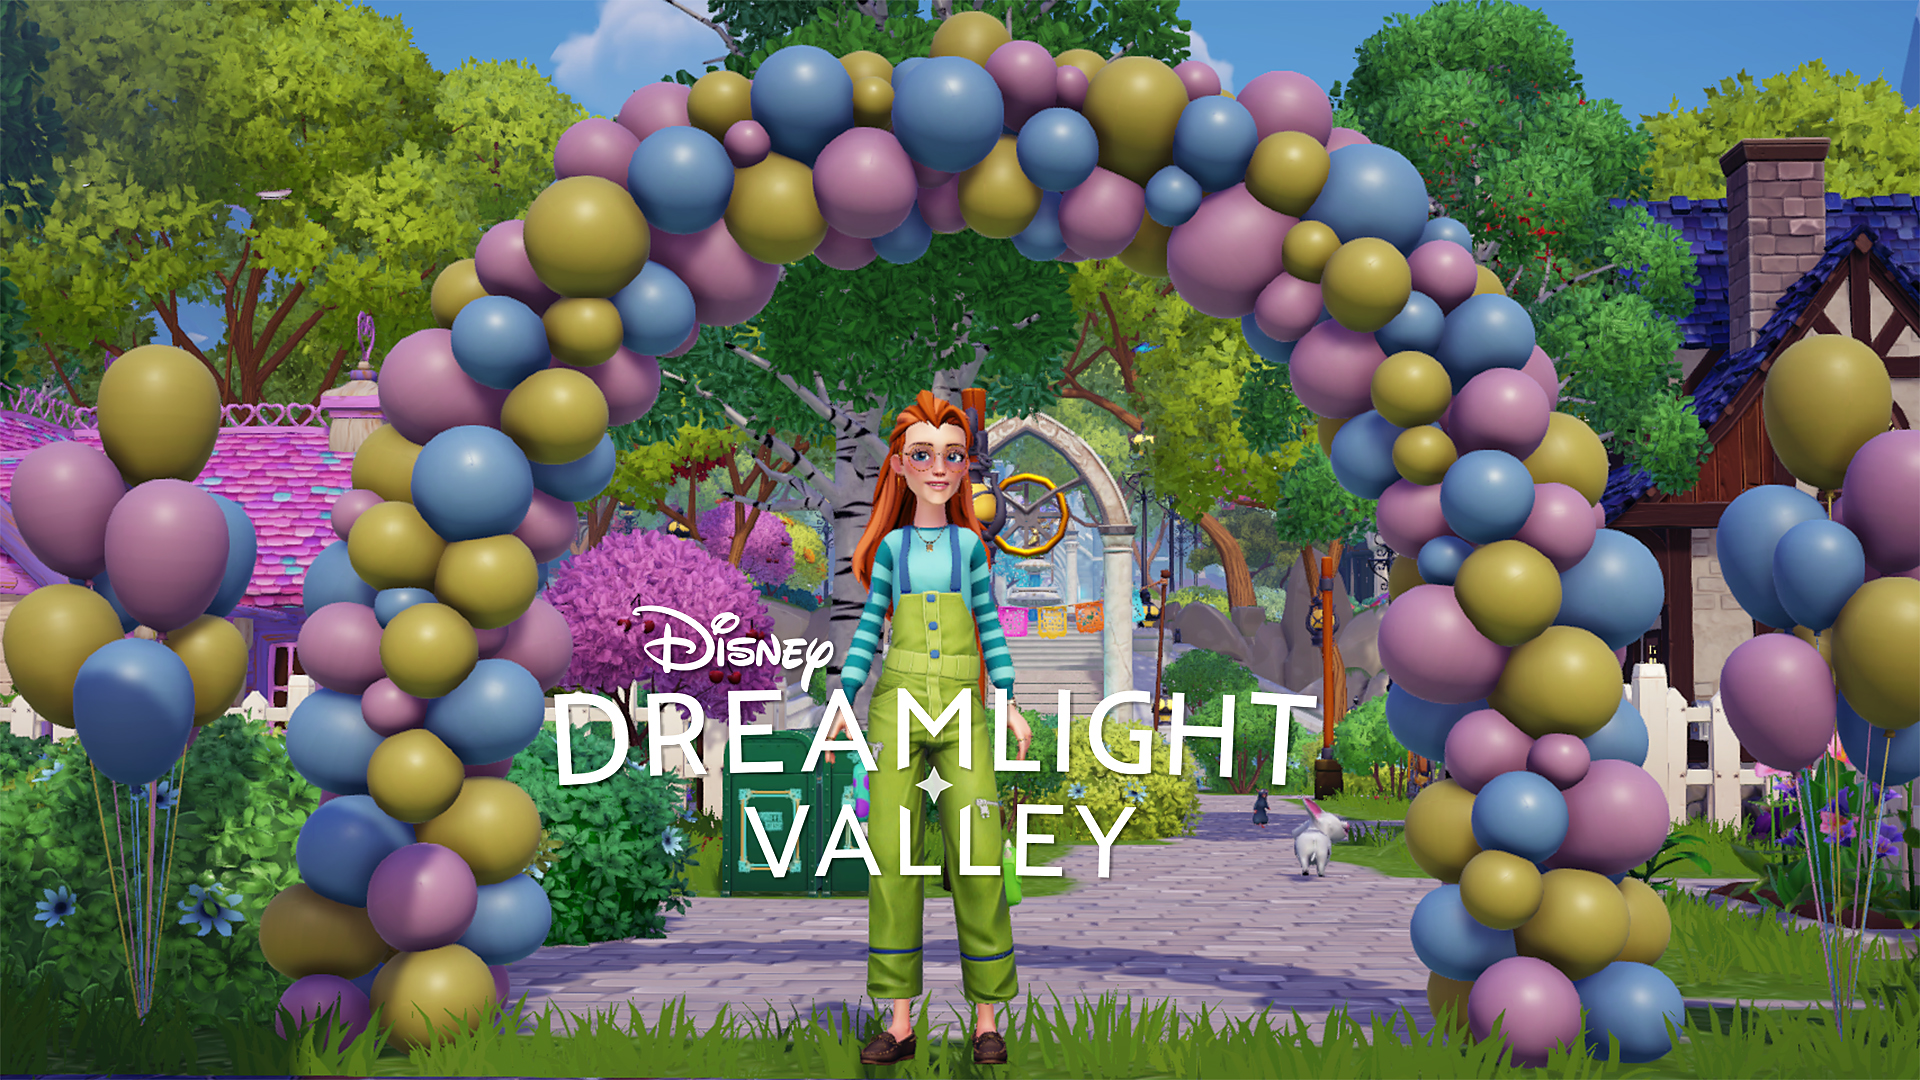 Disney Dreamlight Valley Shop reset (August 23): All Premium items